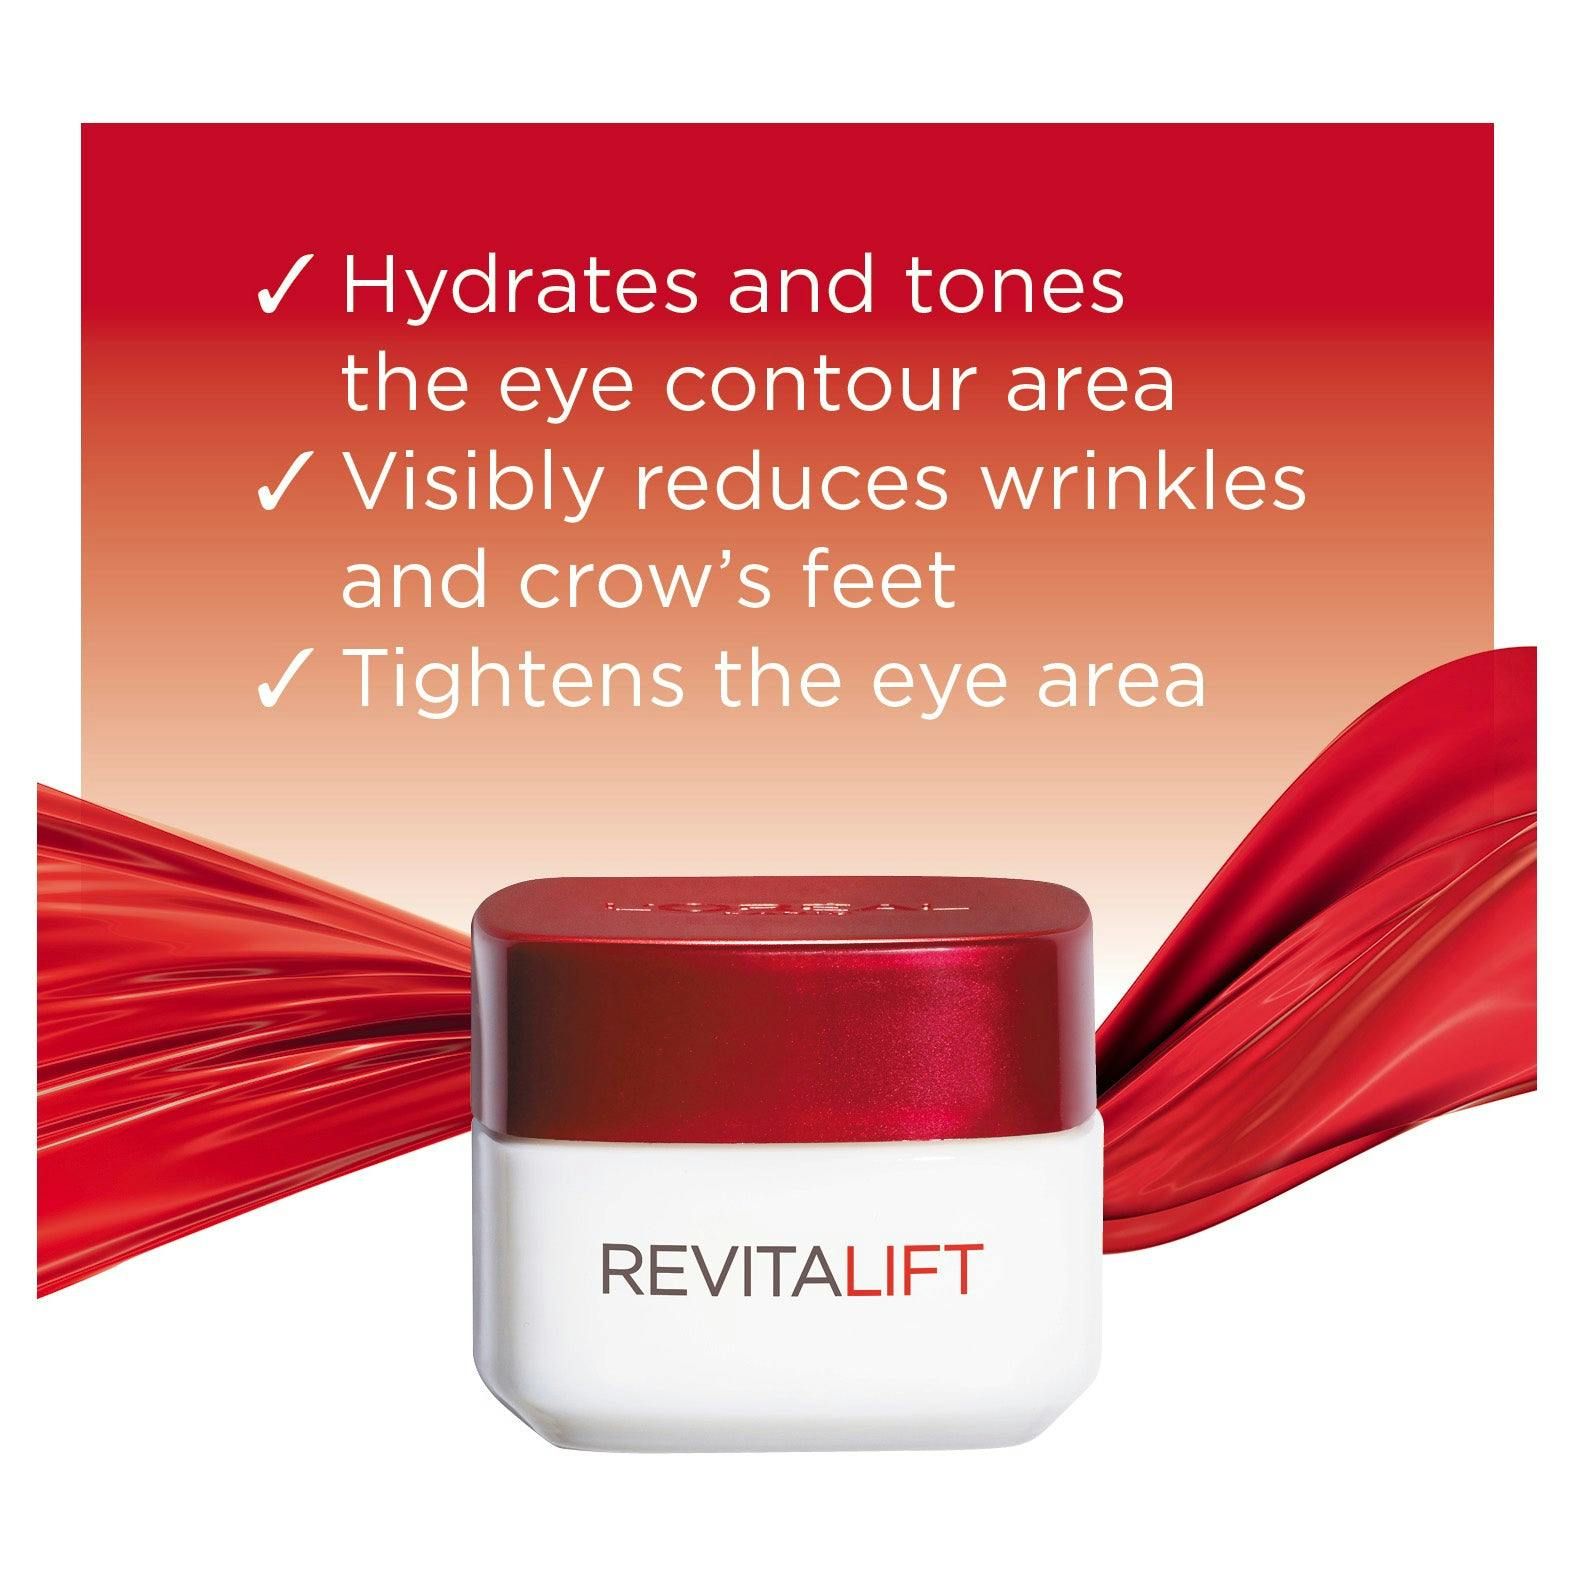 L'Oréal Paris Revitalift Eye Cream